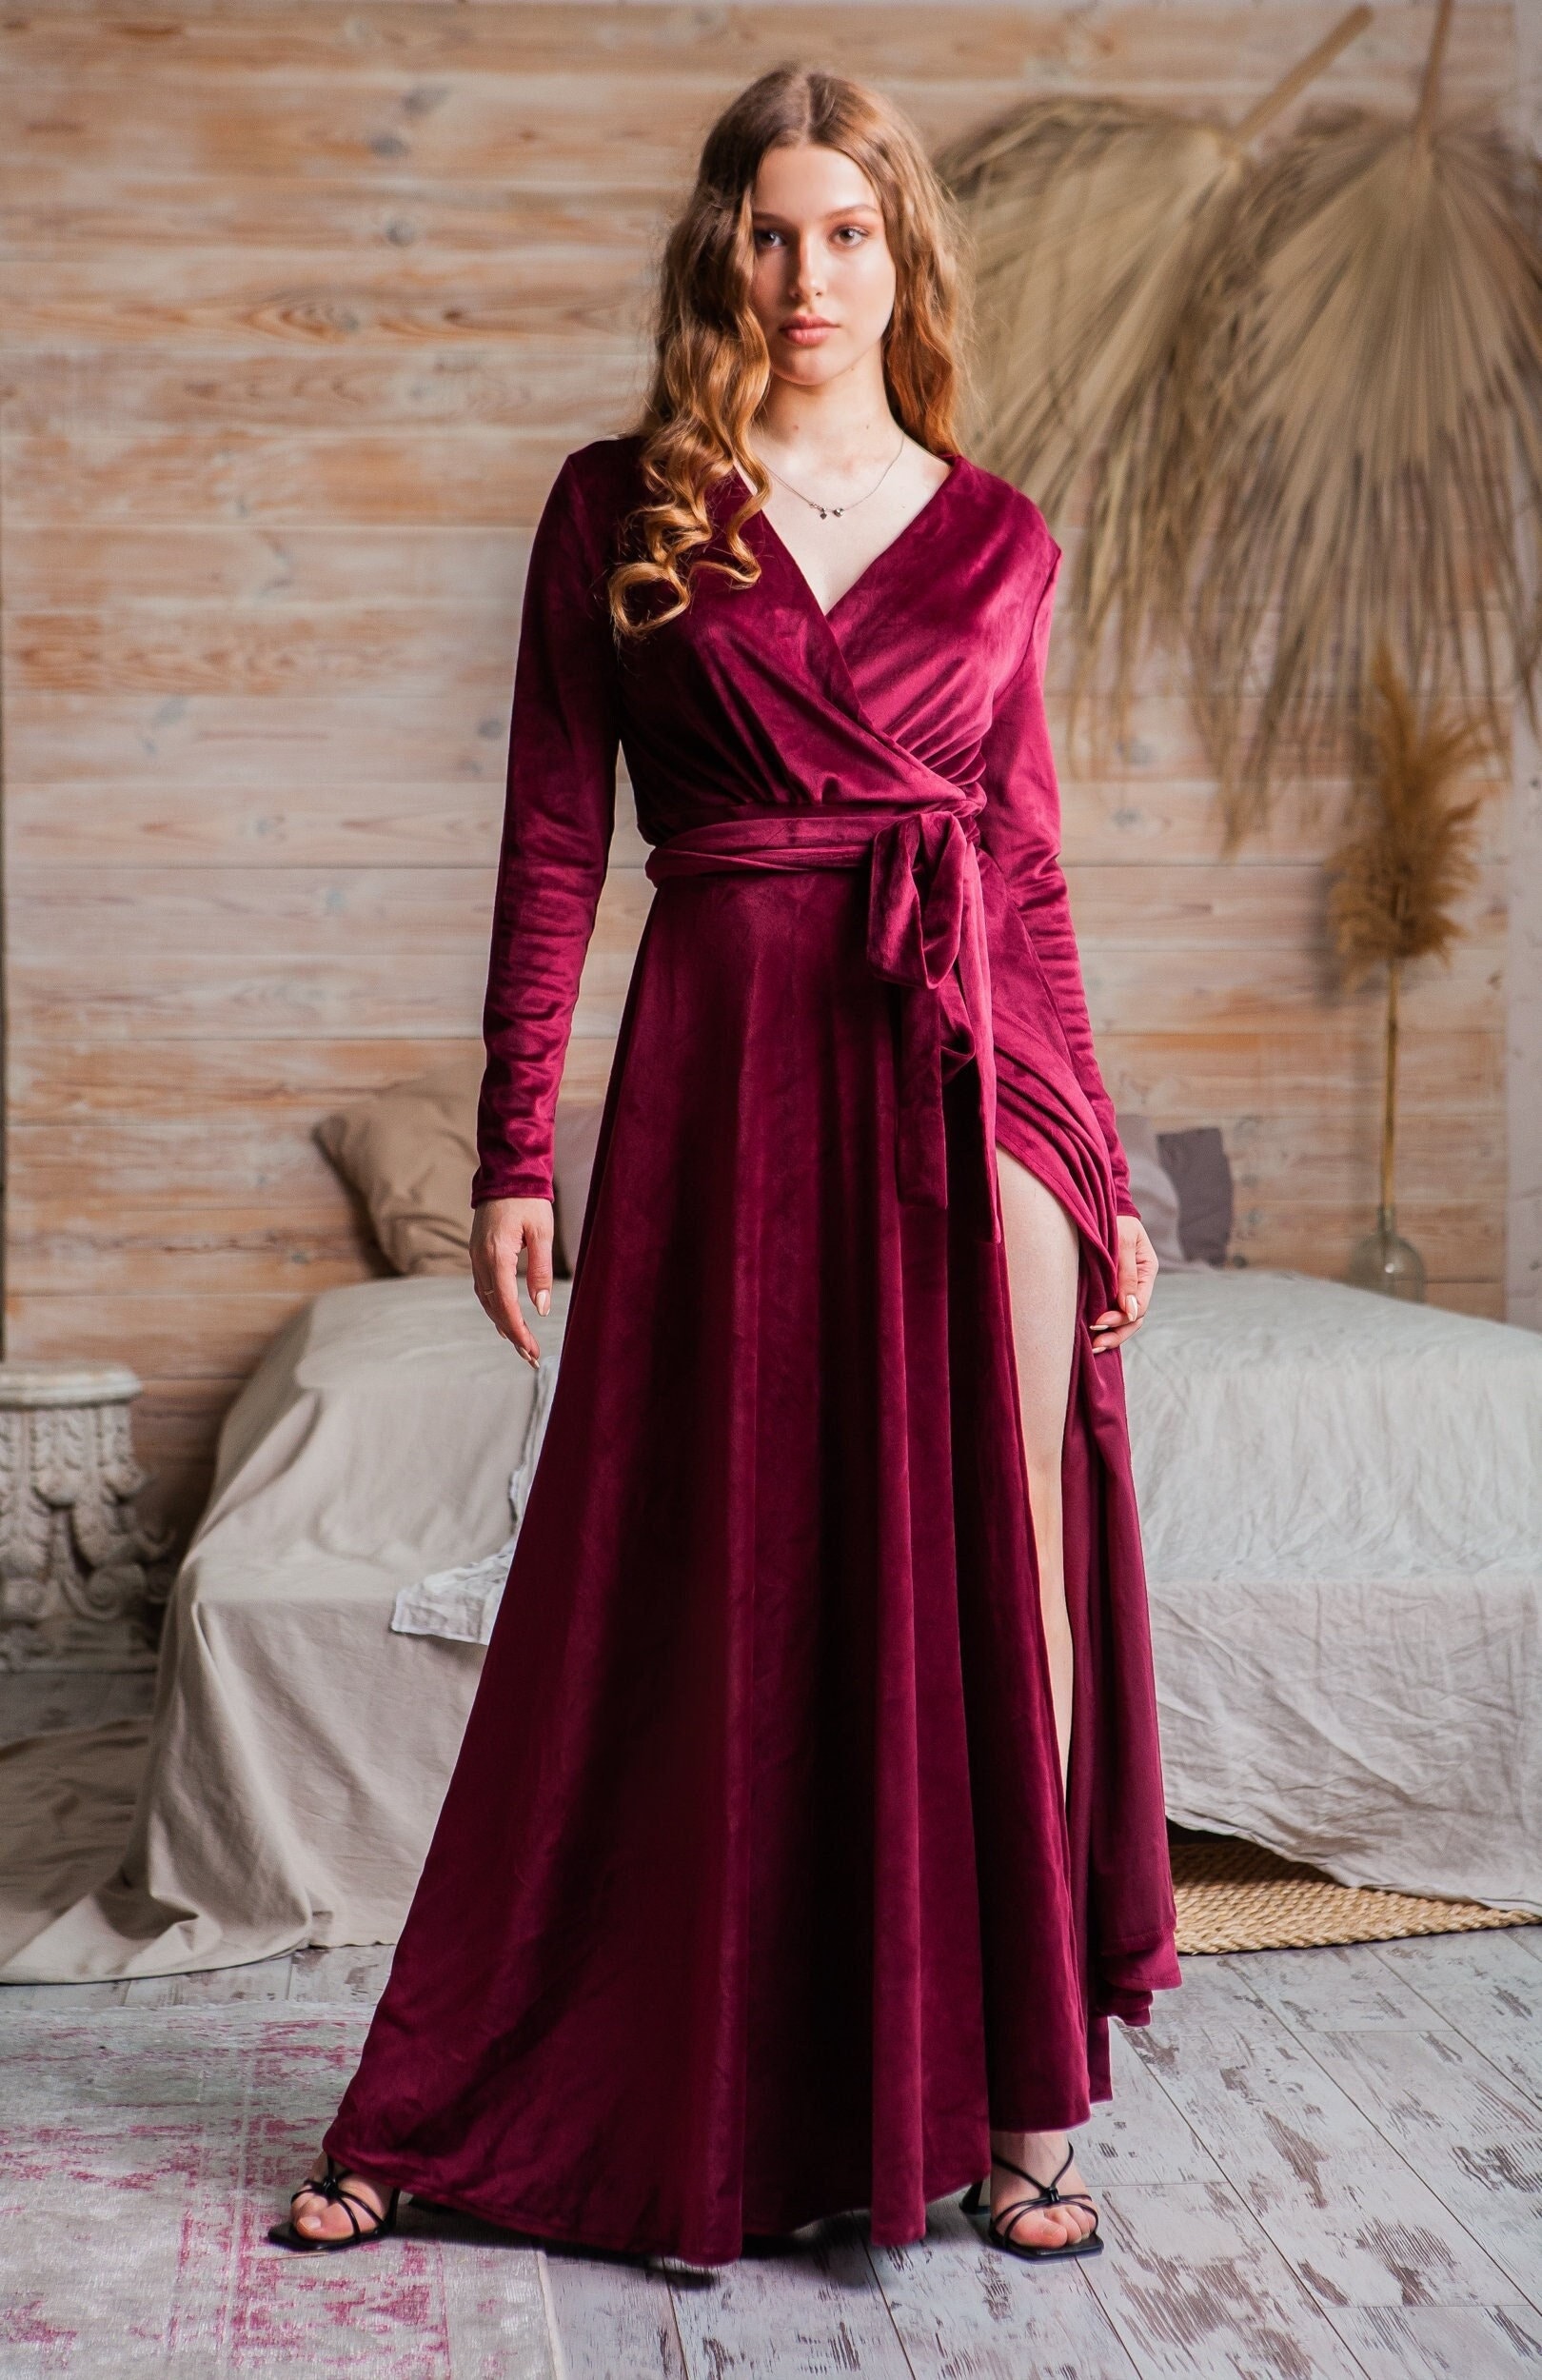 Lady Velvet Sleepwear Velour Long Nightgown Sleep Dress Nightie Victorian  Dress 